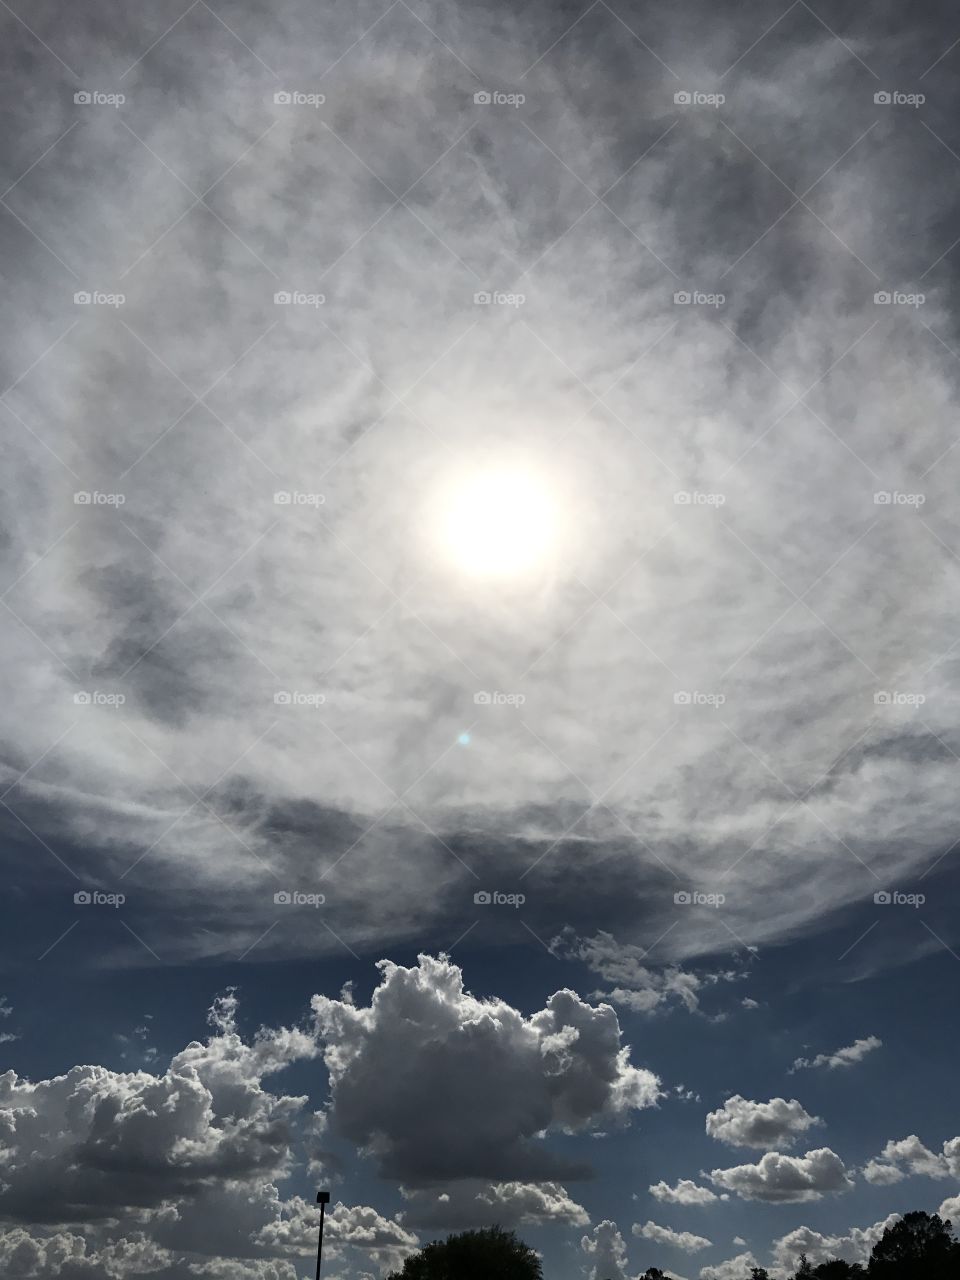 Dramatic skies in Prescott, Arizona. Deep, vivid, Crayon blue sky with an intense sun breaking through the clouds. 